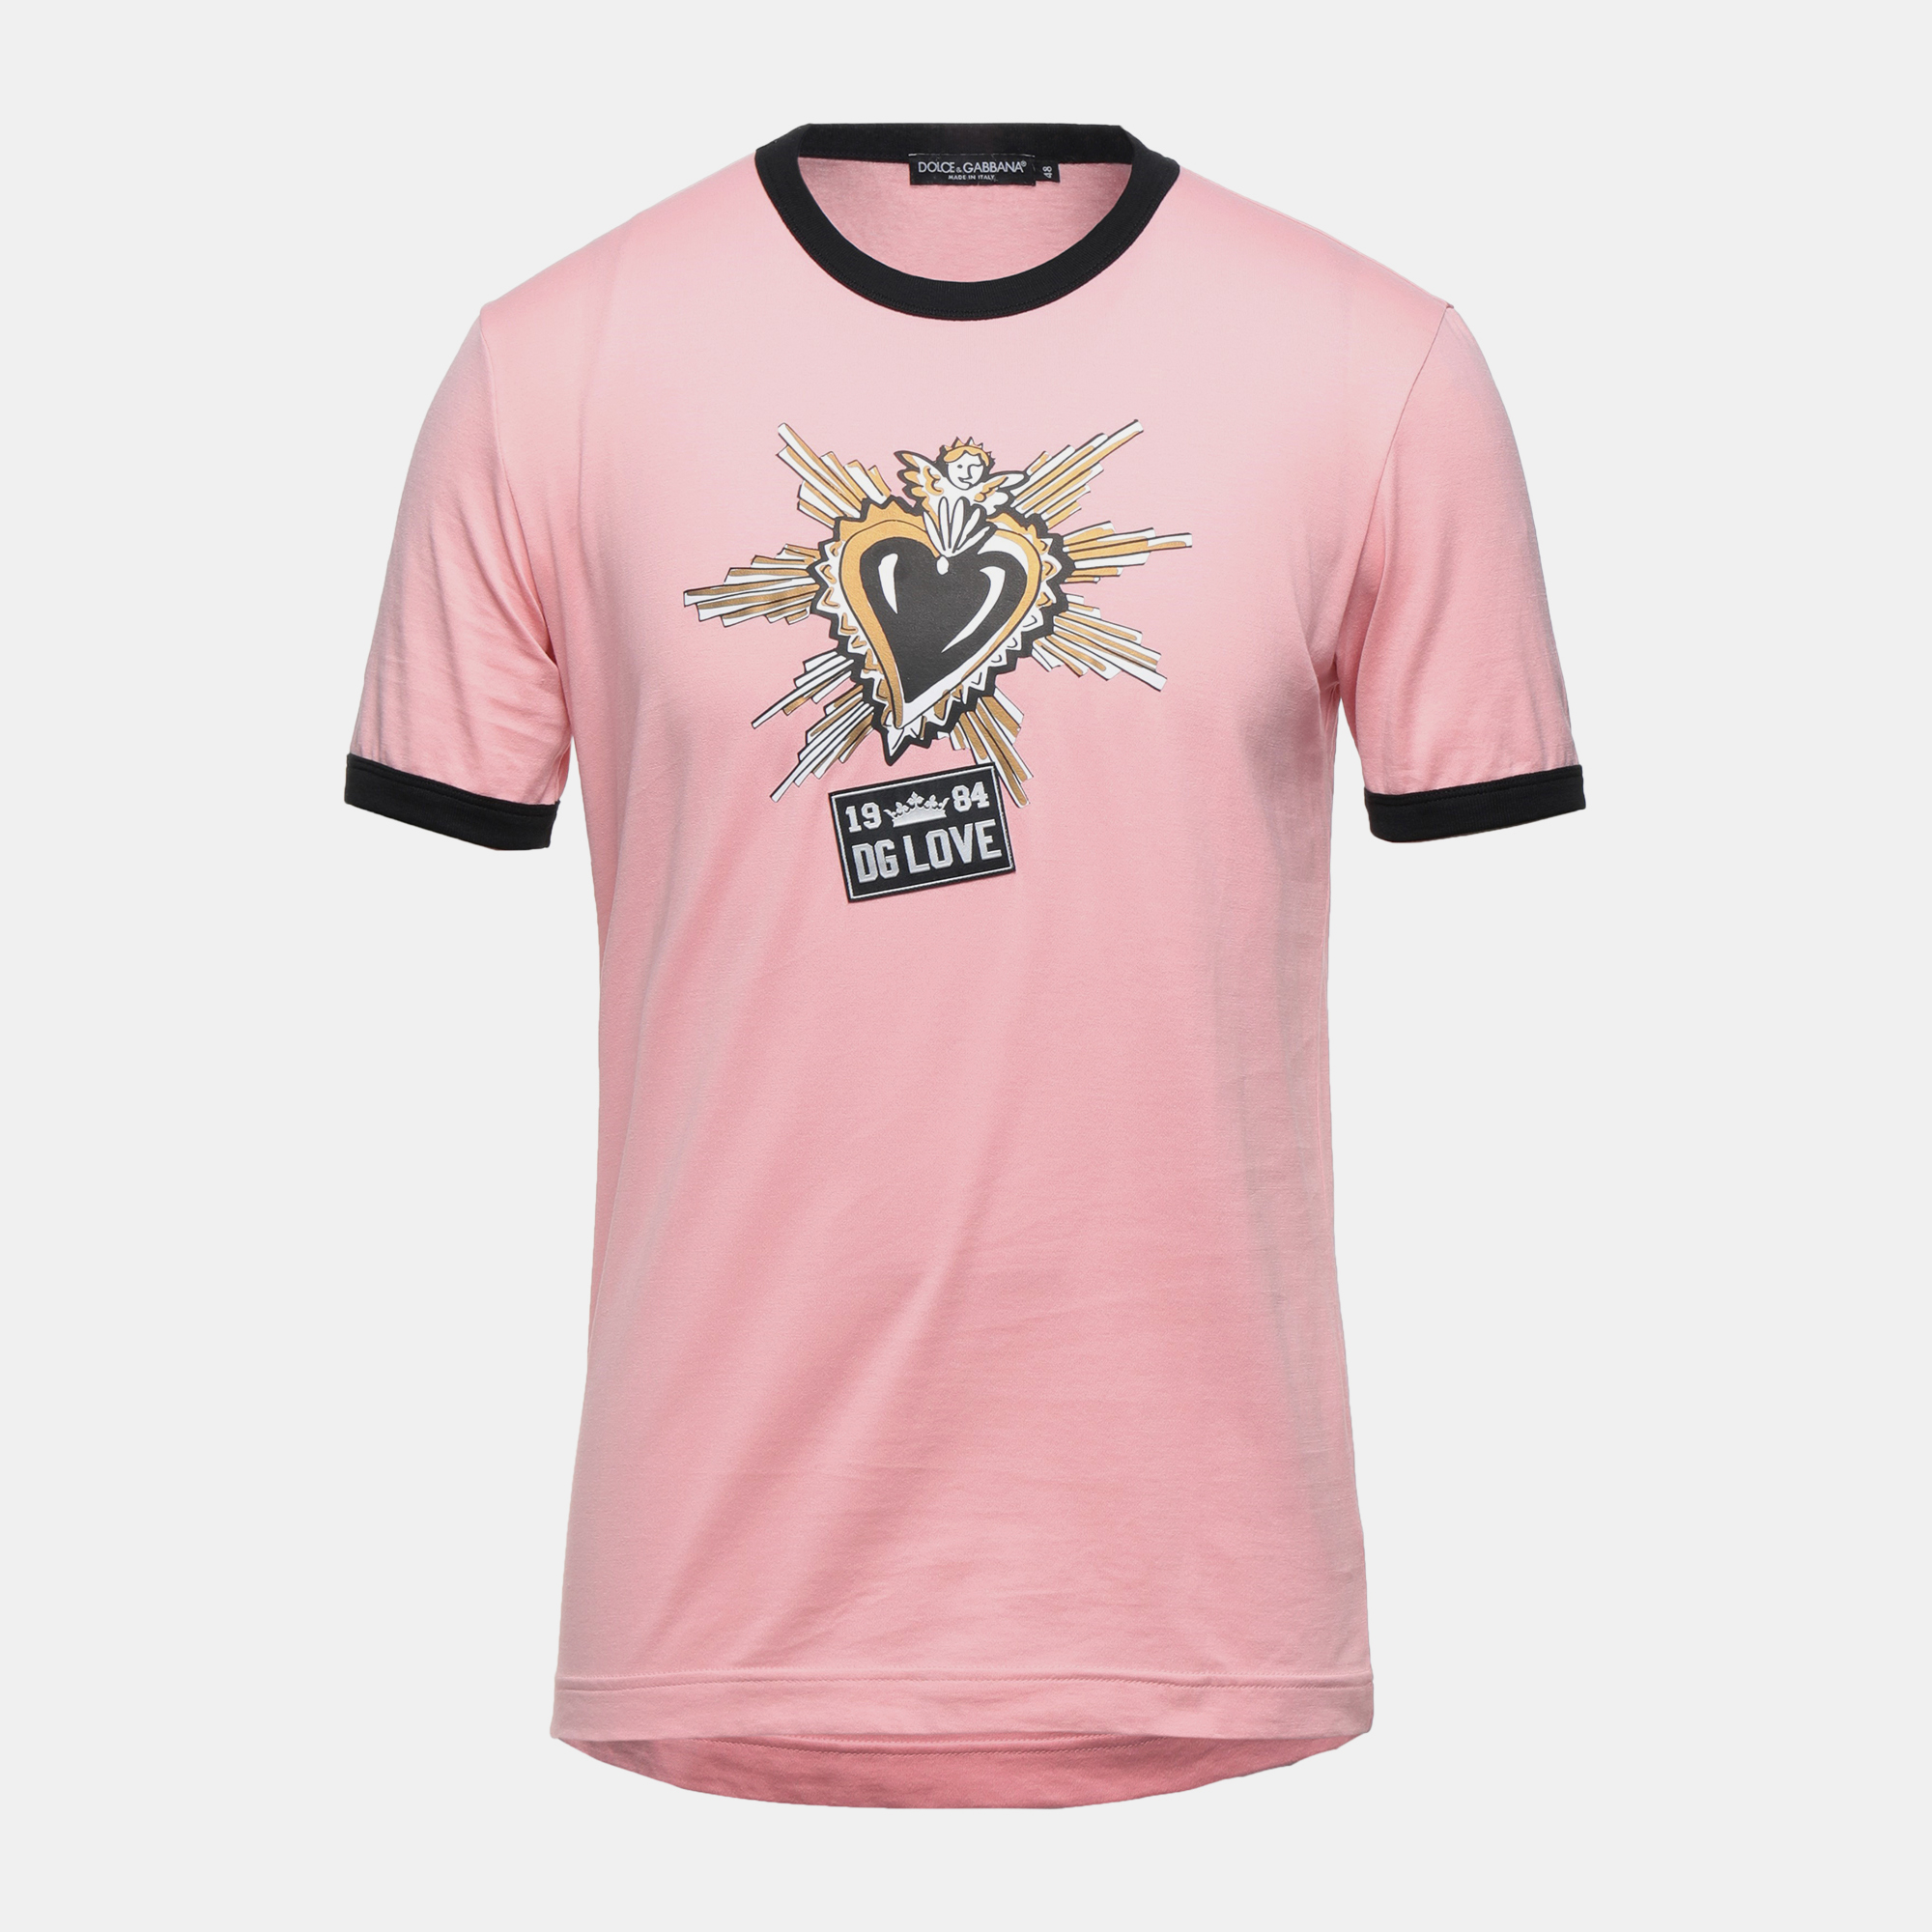 Dolce & gabbana pink/black jersey t-shirt size 58